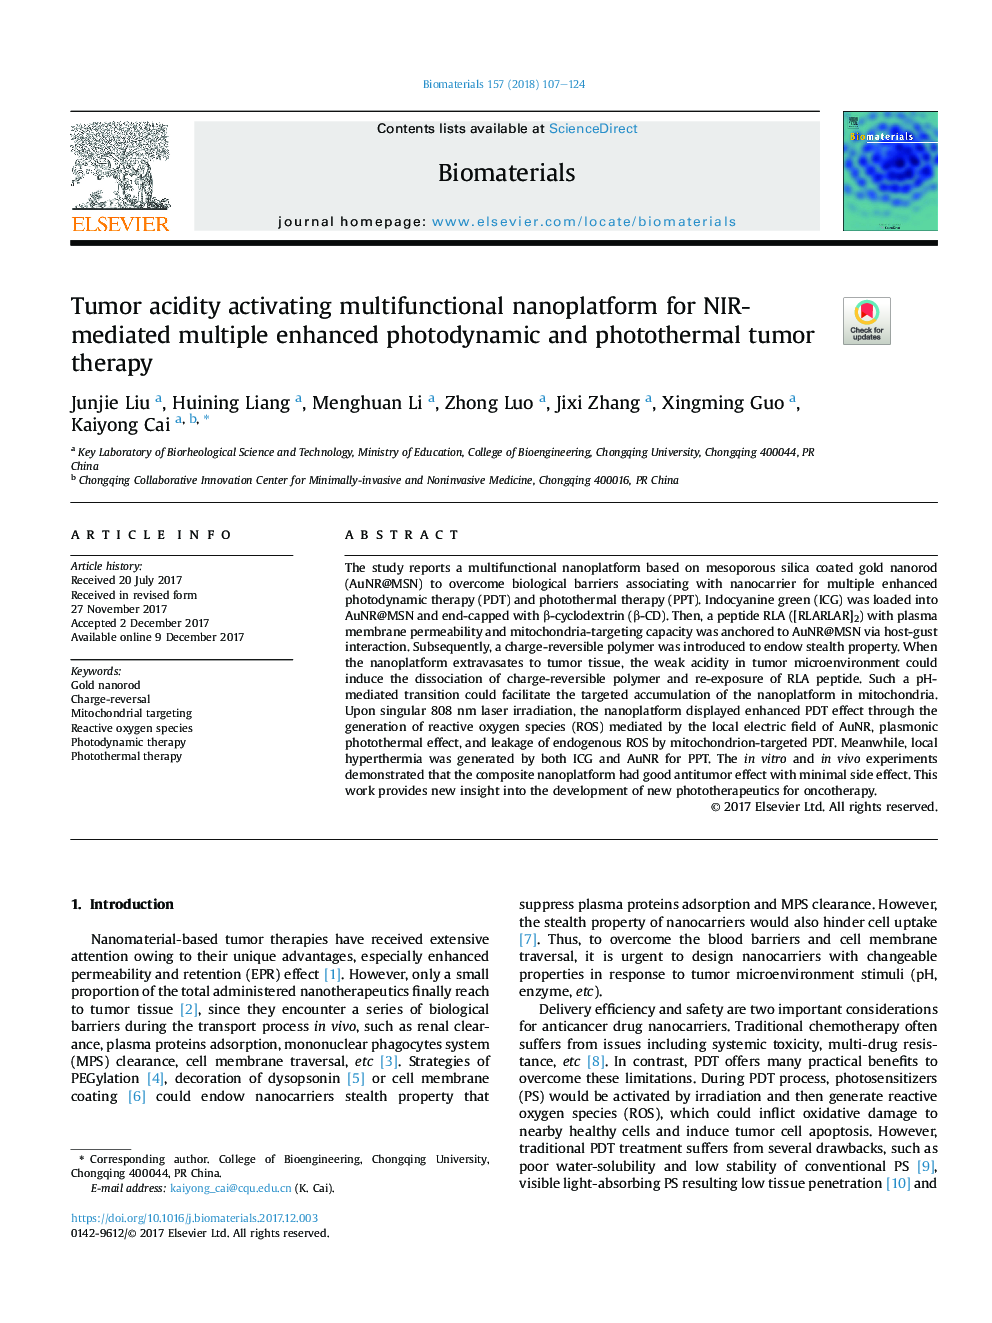 Tumor acidity activating multifunctional nanoplatform for NIR-mediated multiple enhanced photodynamic and photothermal tumor therapy